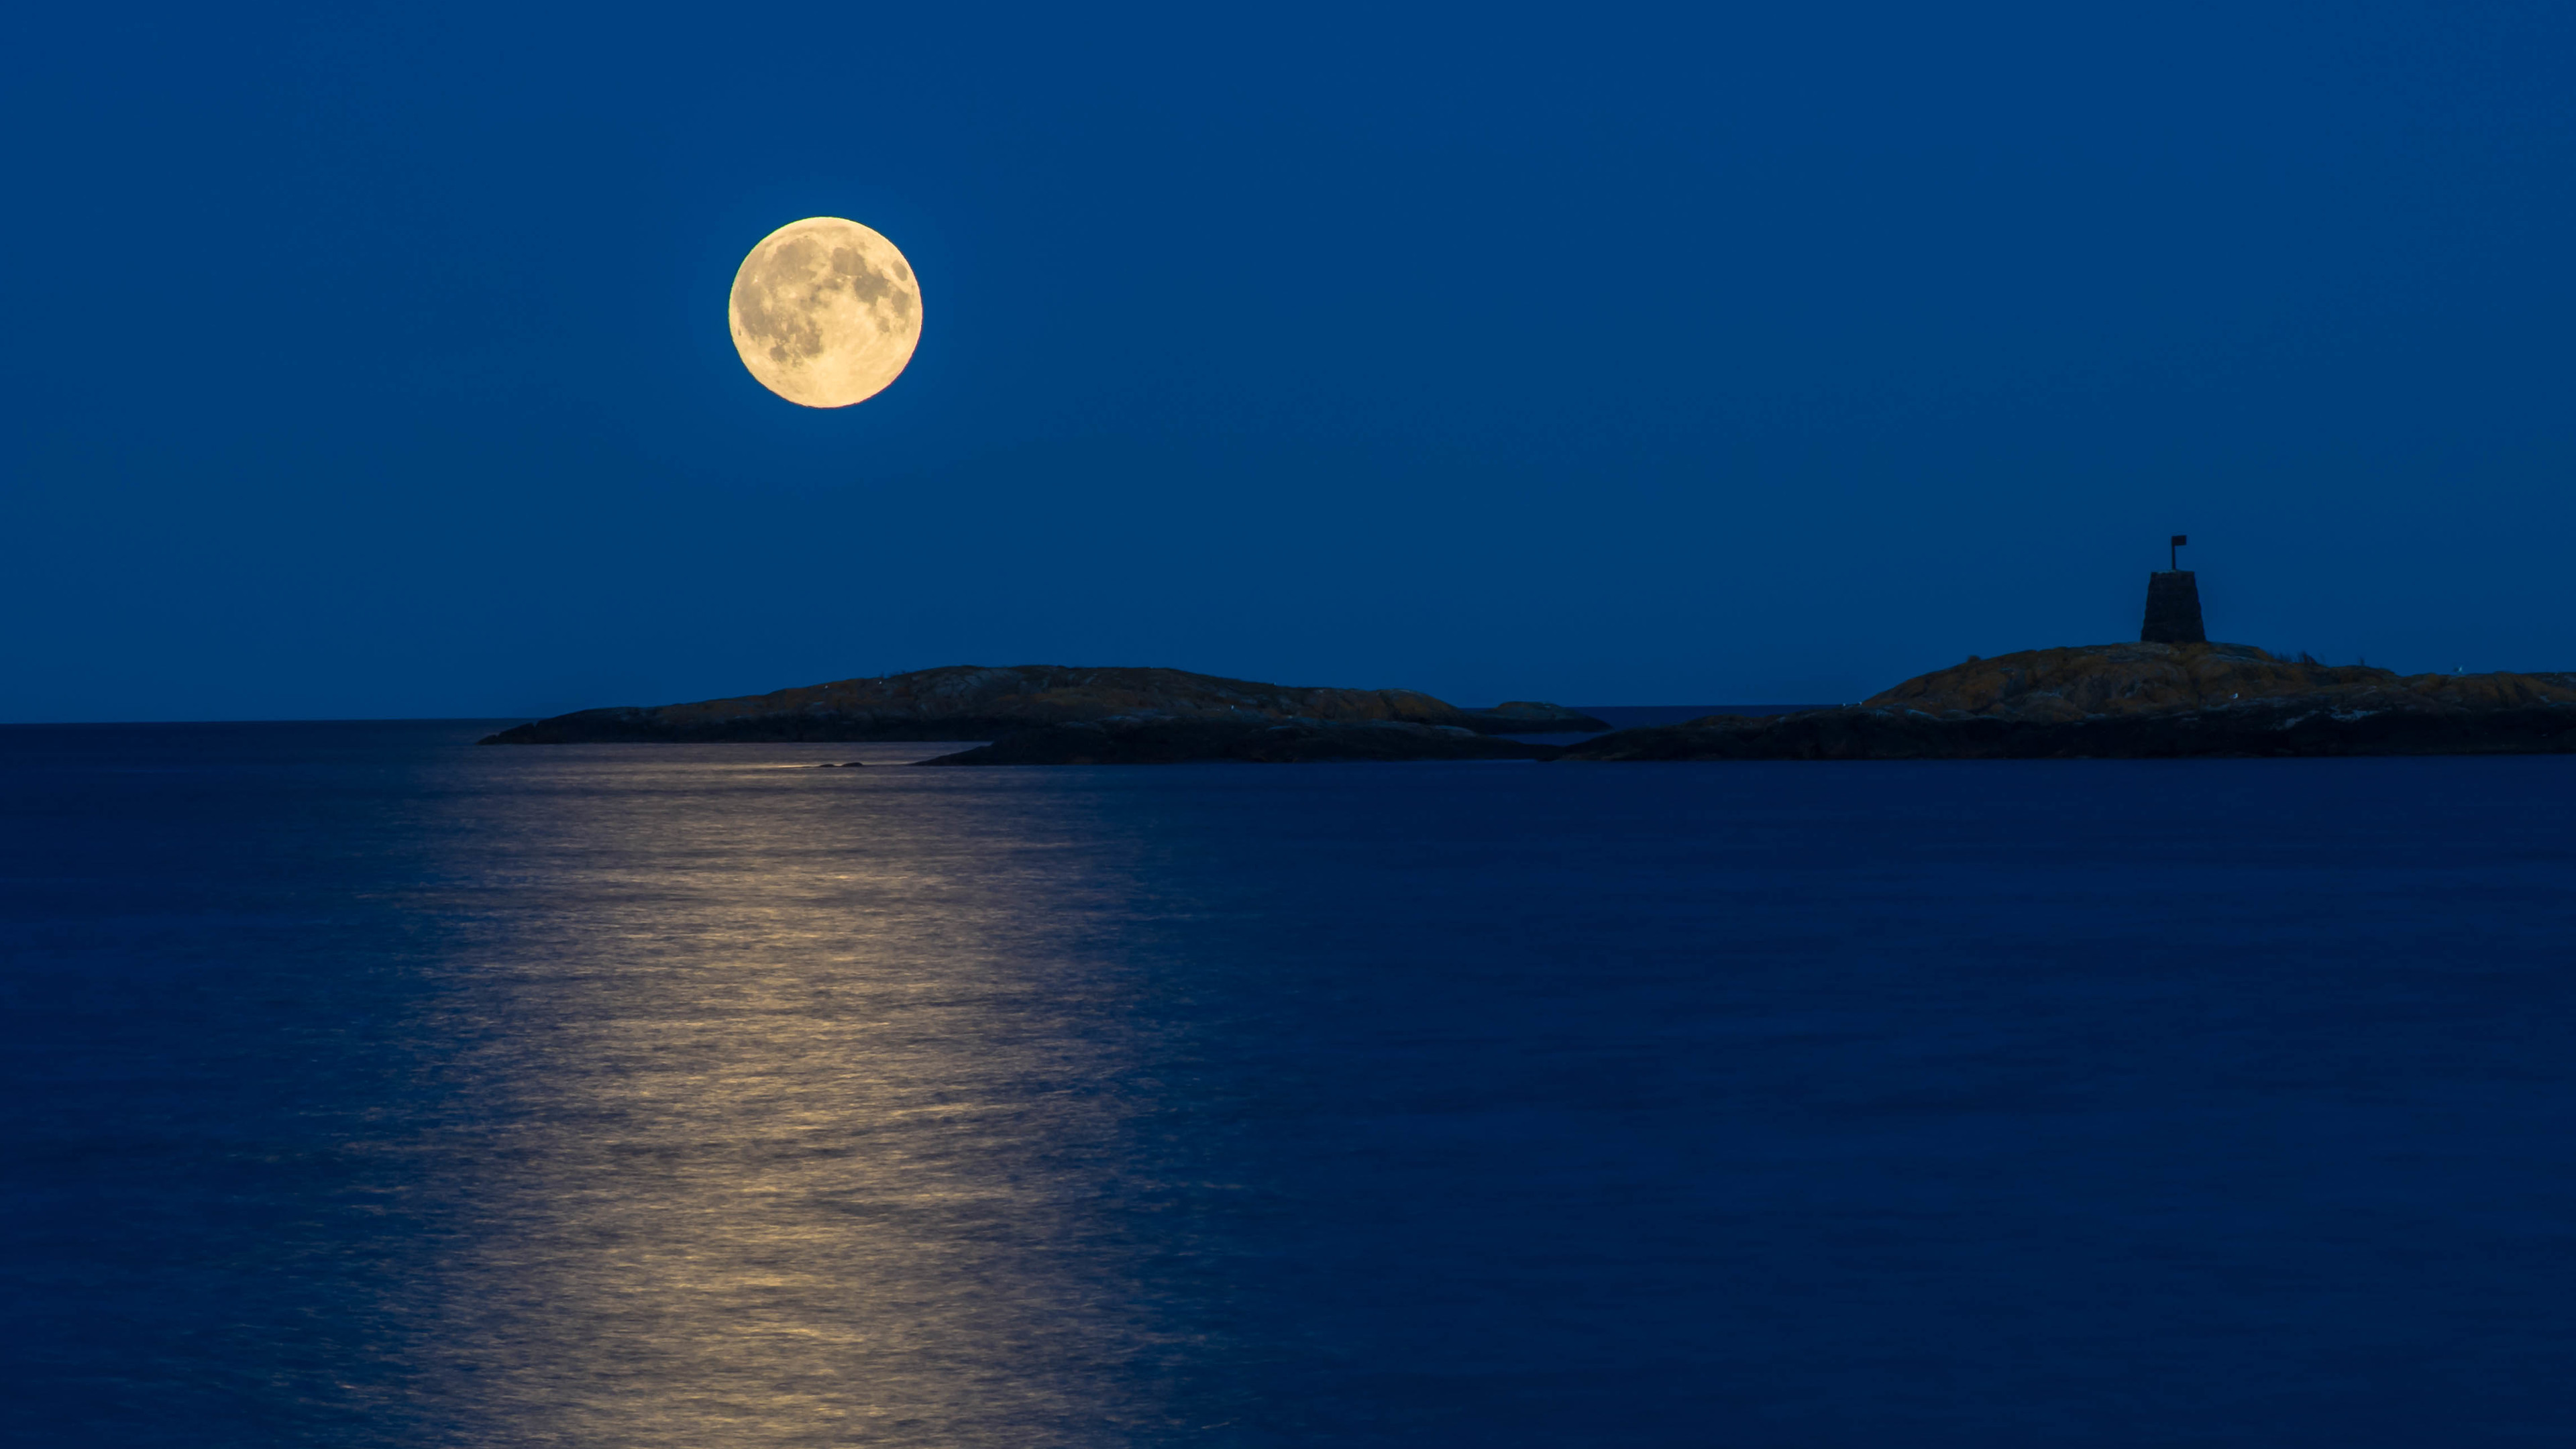 Moonlight Reflection In Sea 4k - Moonlight On The Sea - HD Wallpaper 